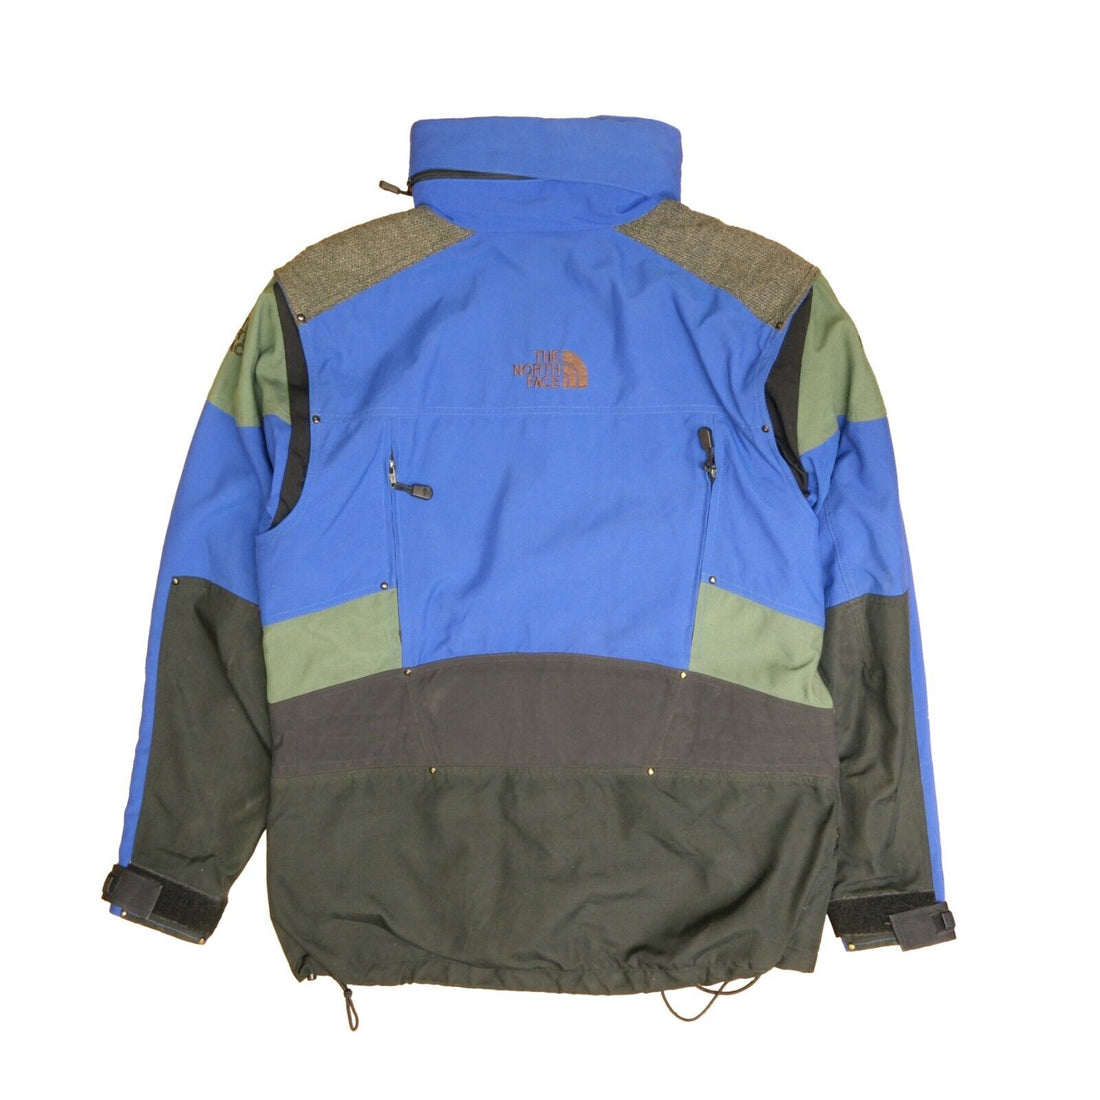 Vintage The North Face Steep Tech Ski Jacket Size Medium Blue